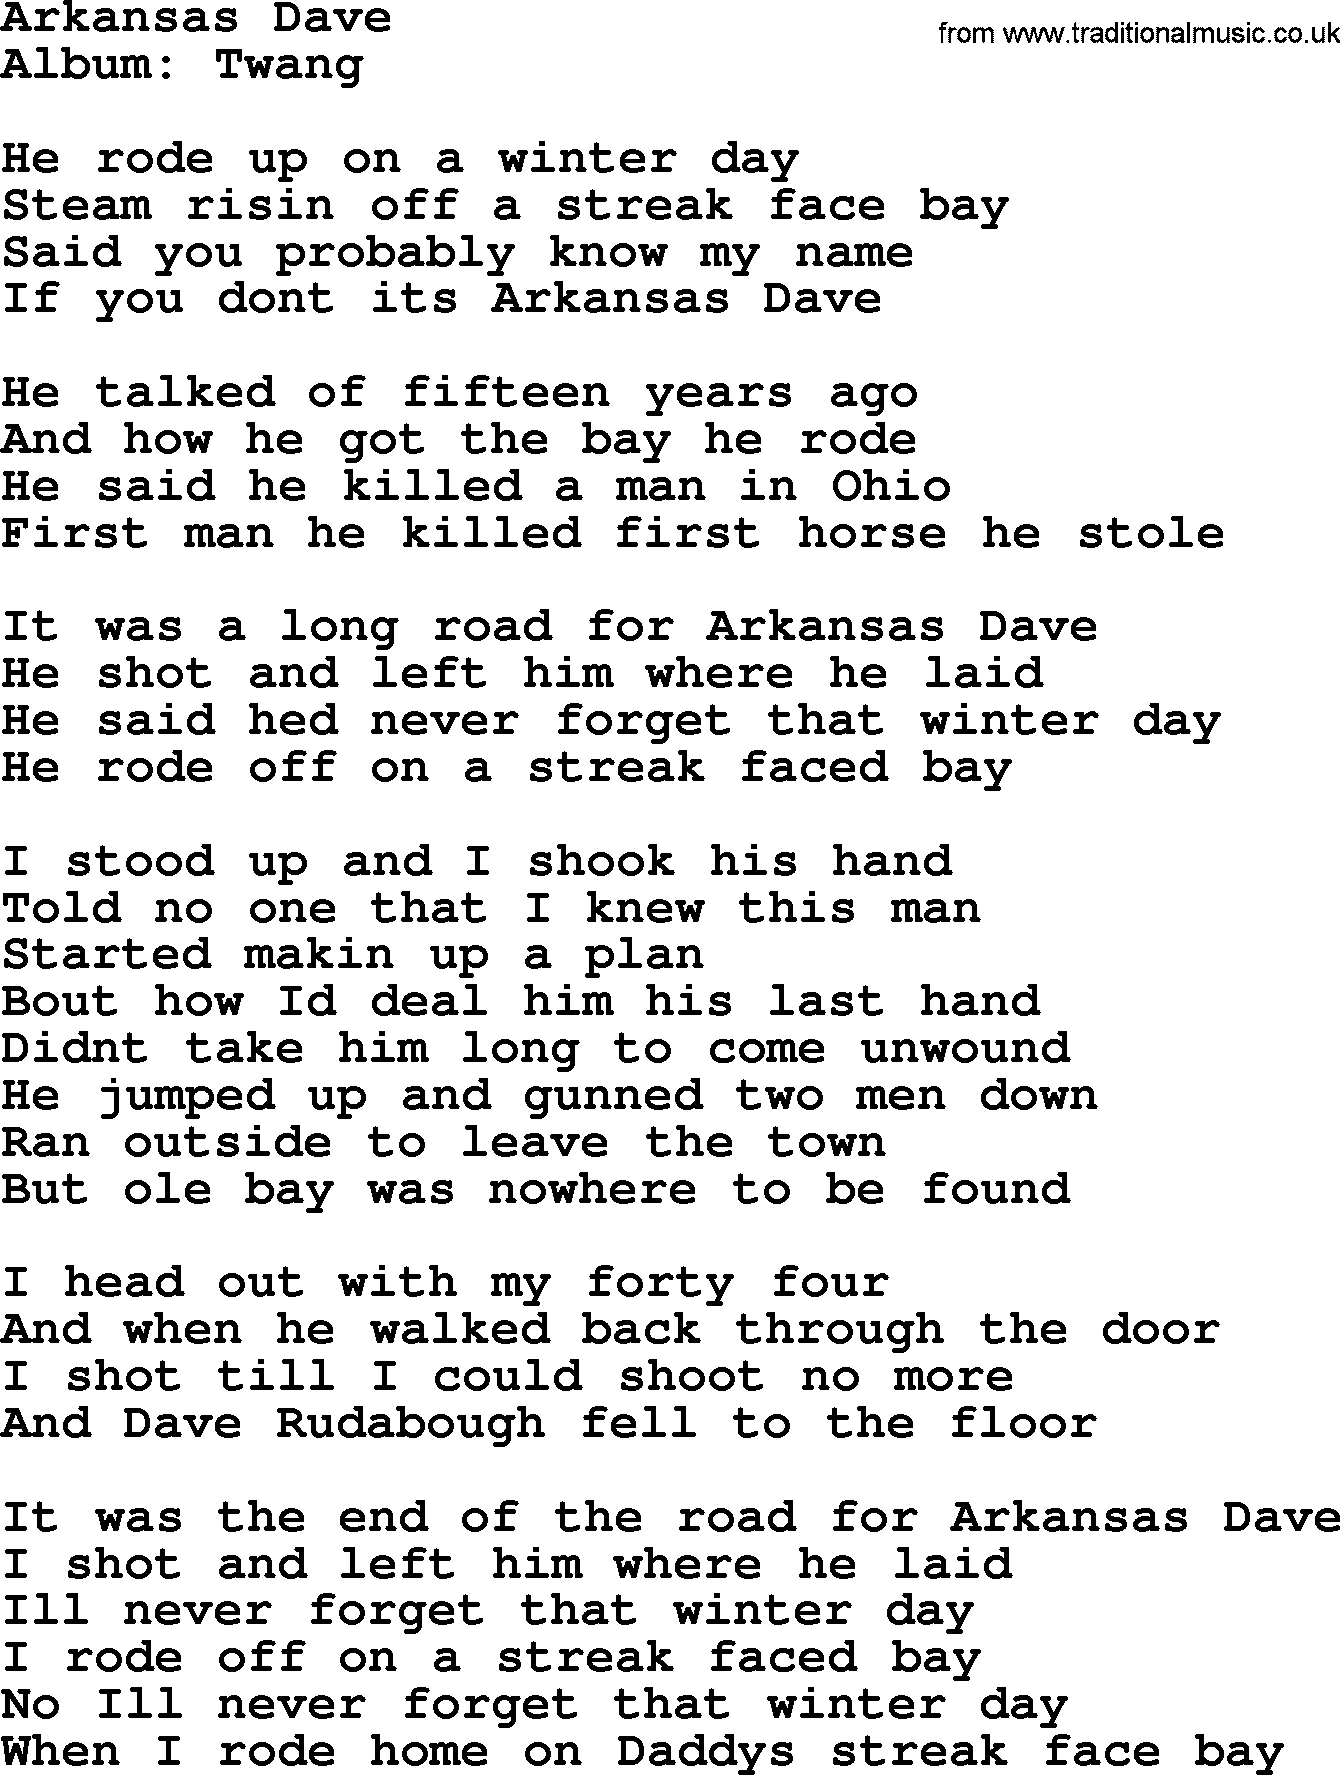 George Strait song: Arkansas Dave, lyrics